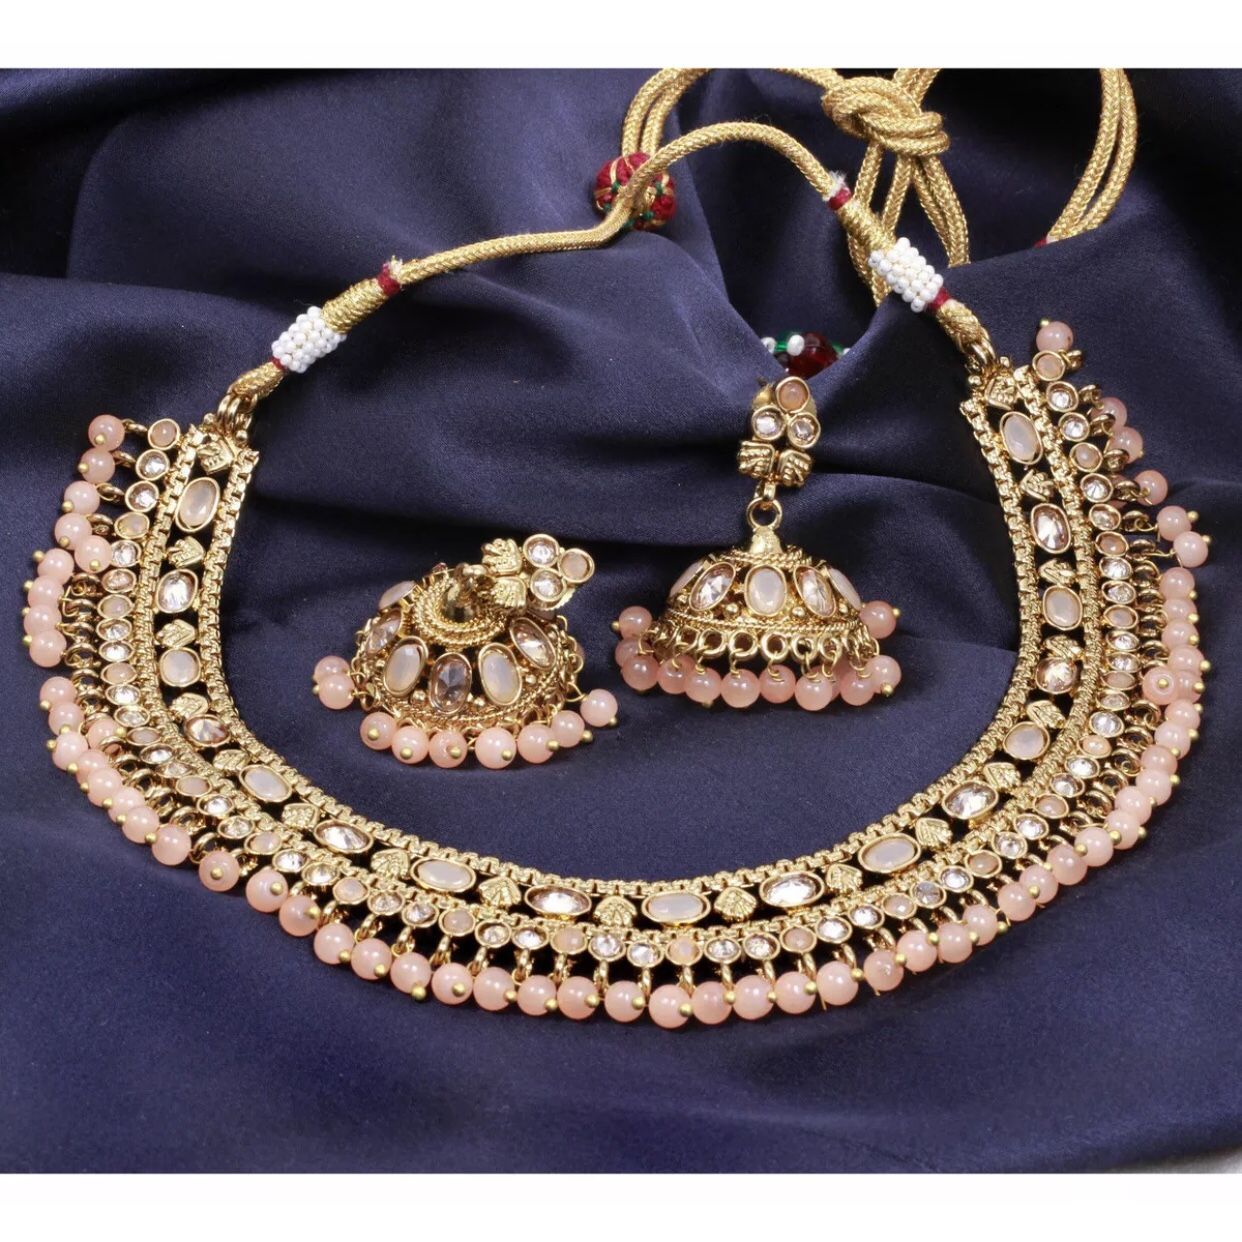 Gold plated Indian Kundan beads HIGH QUALITY necklace earrings jumka set